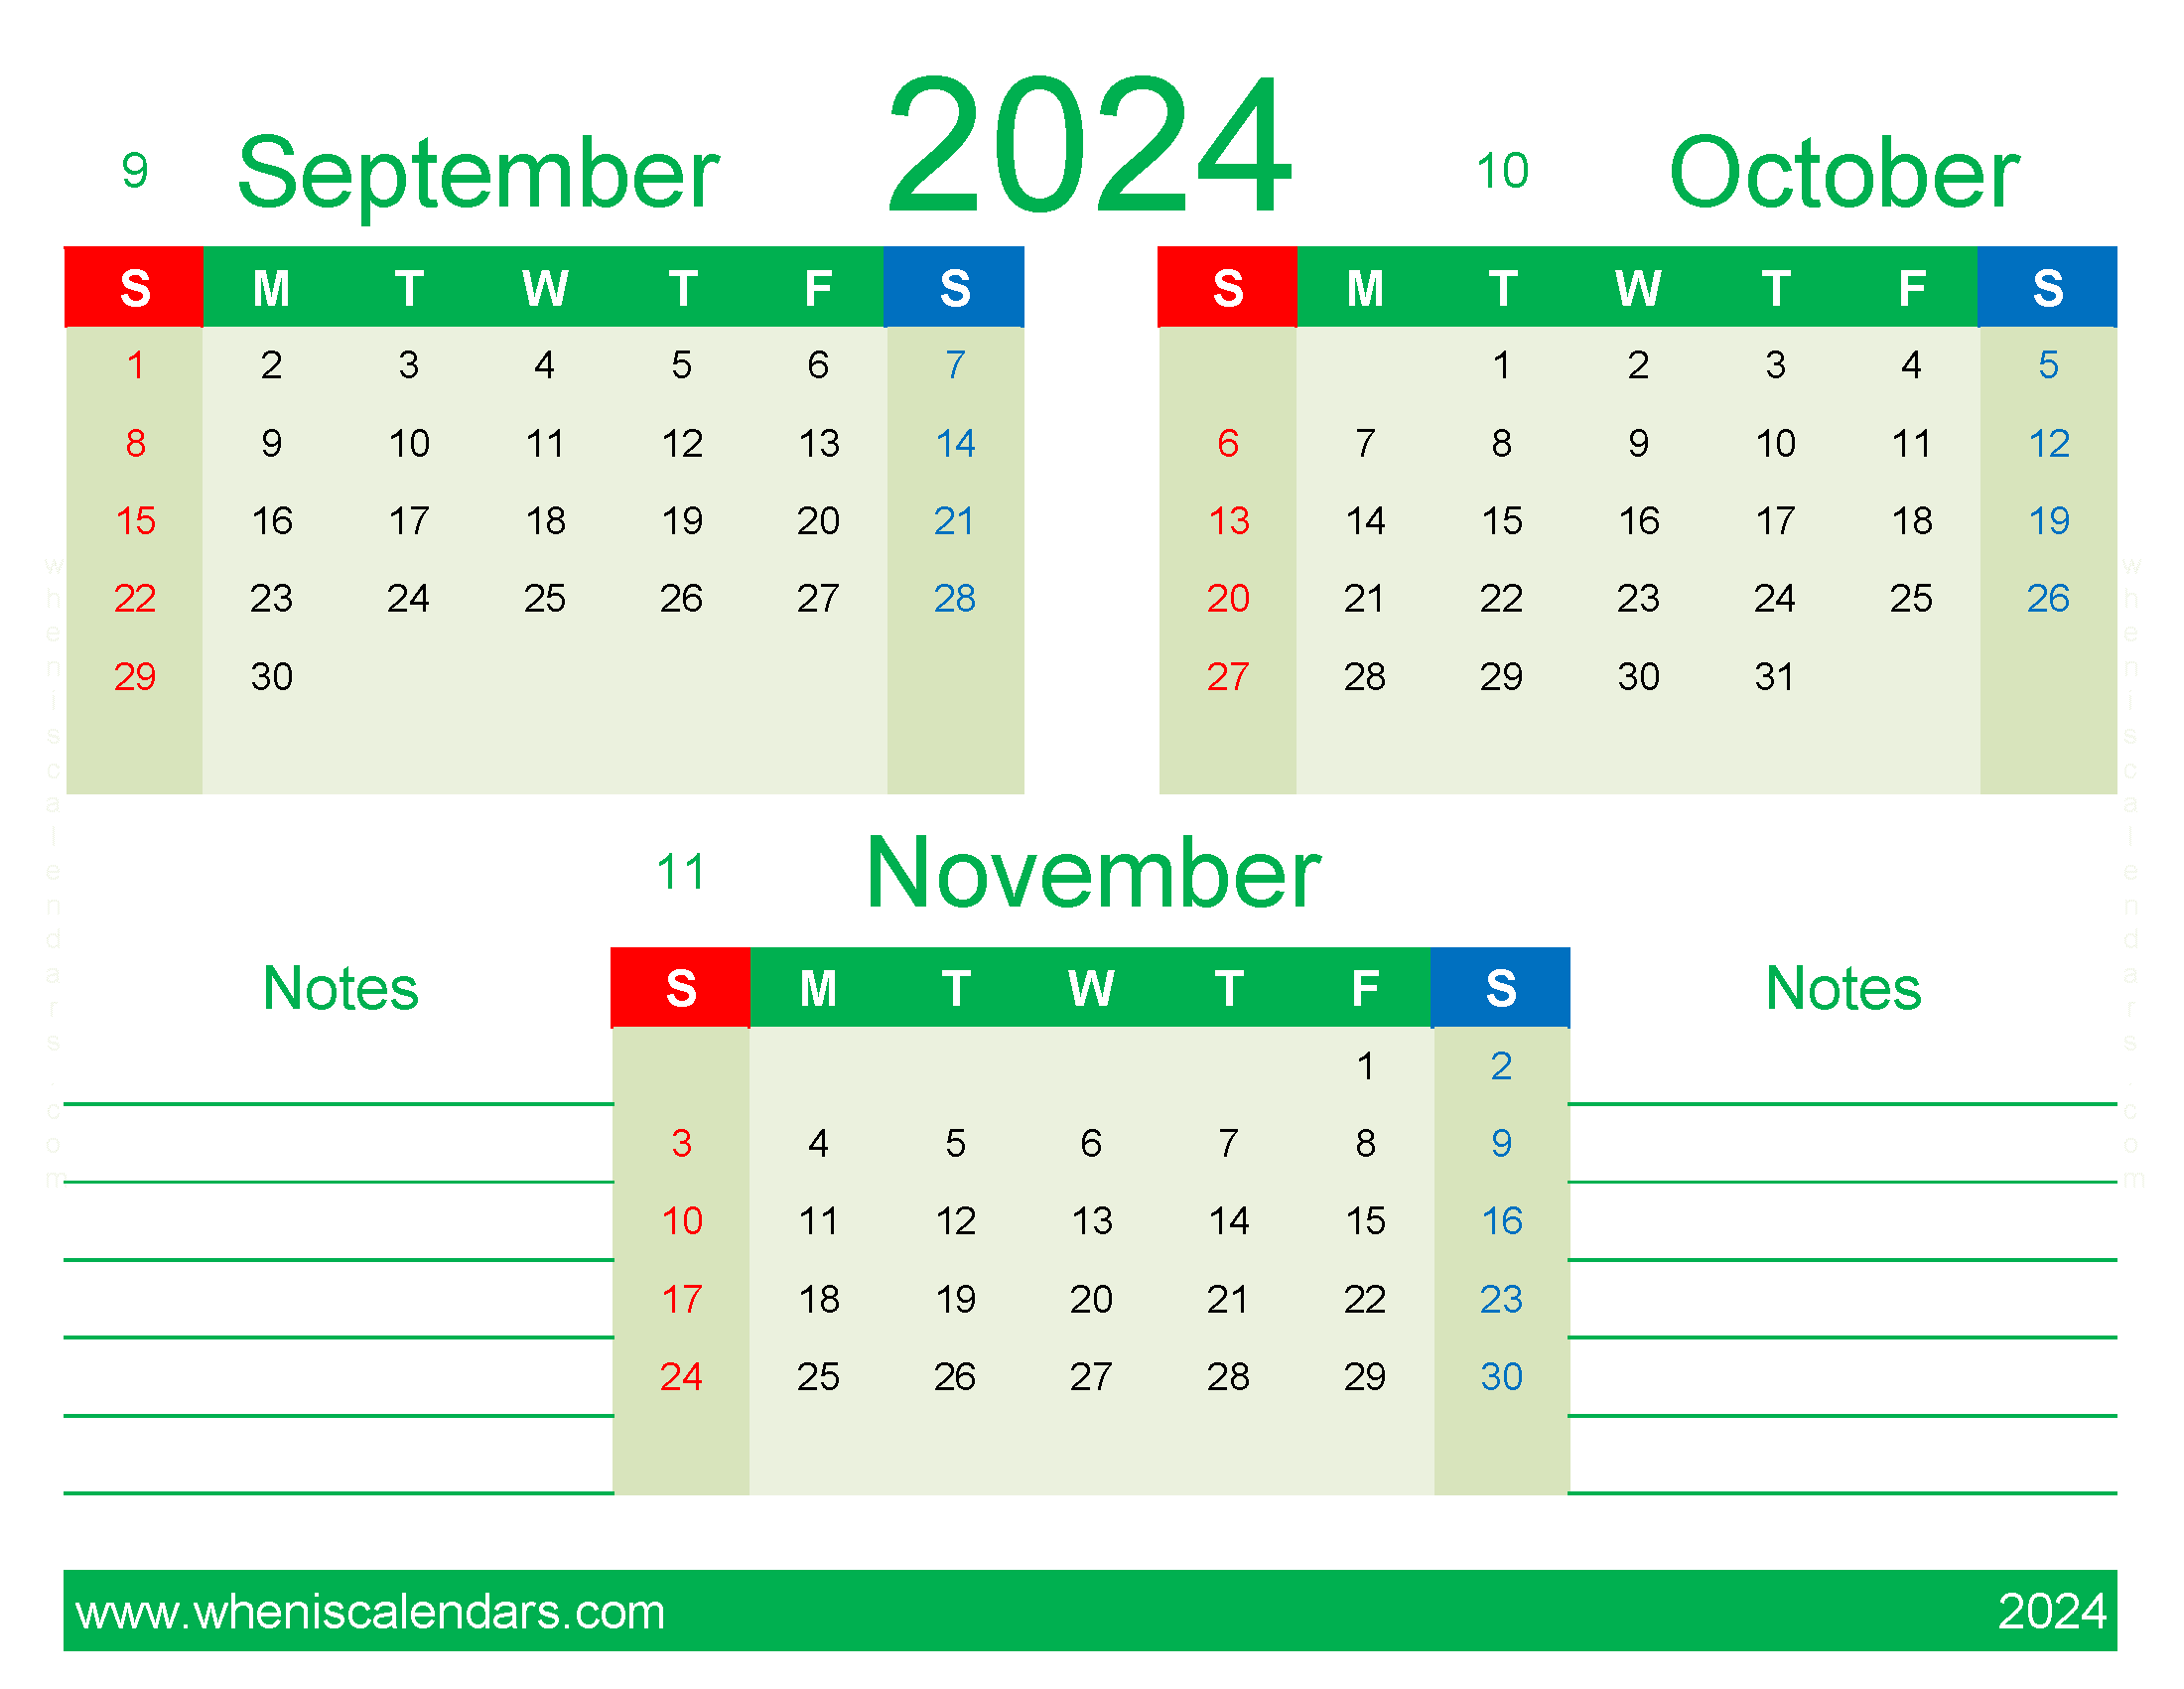 Download Sept Oct and November 2024 Calendar SON432